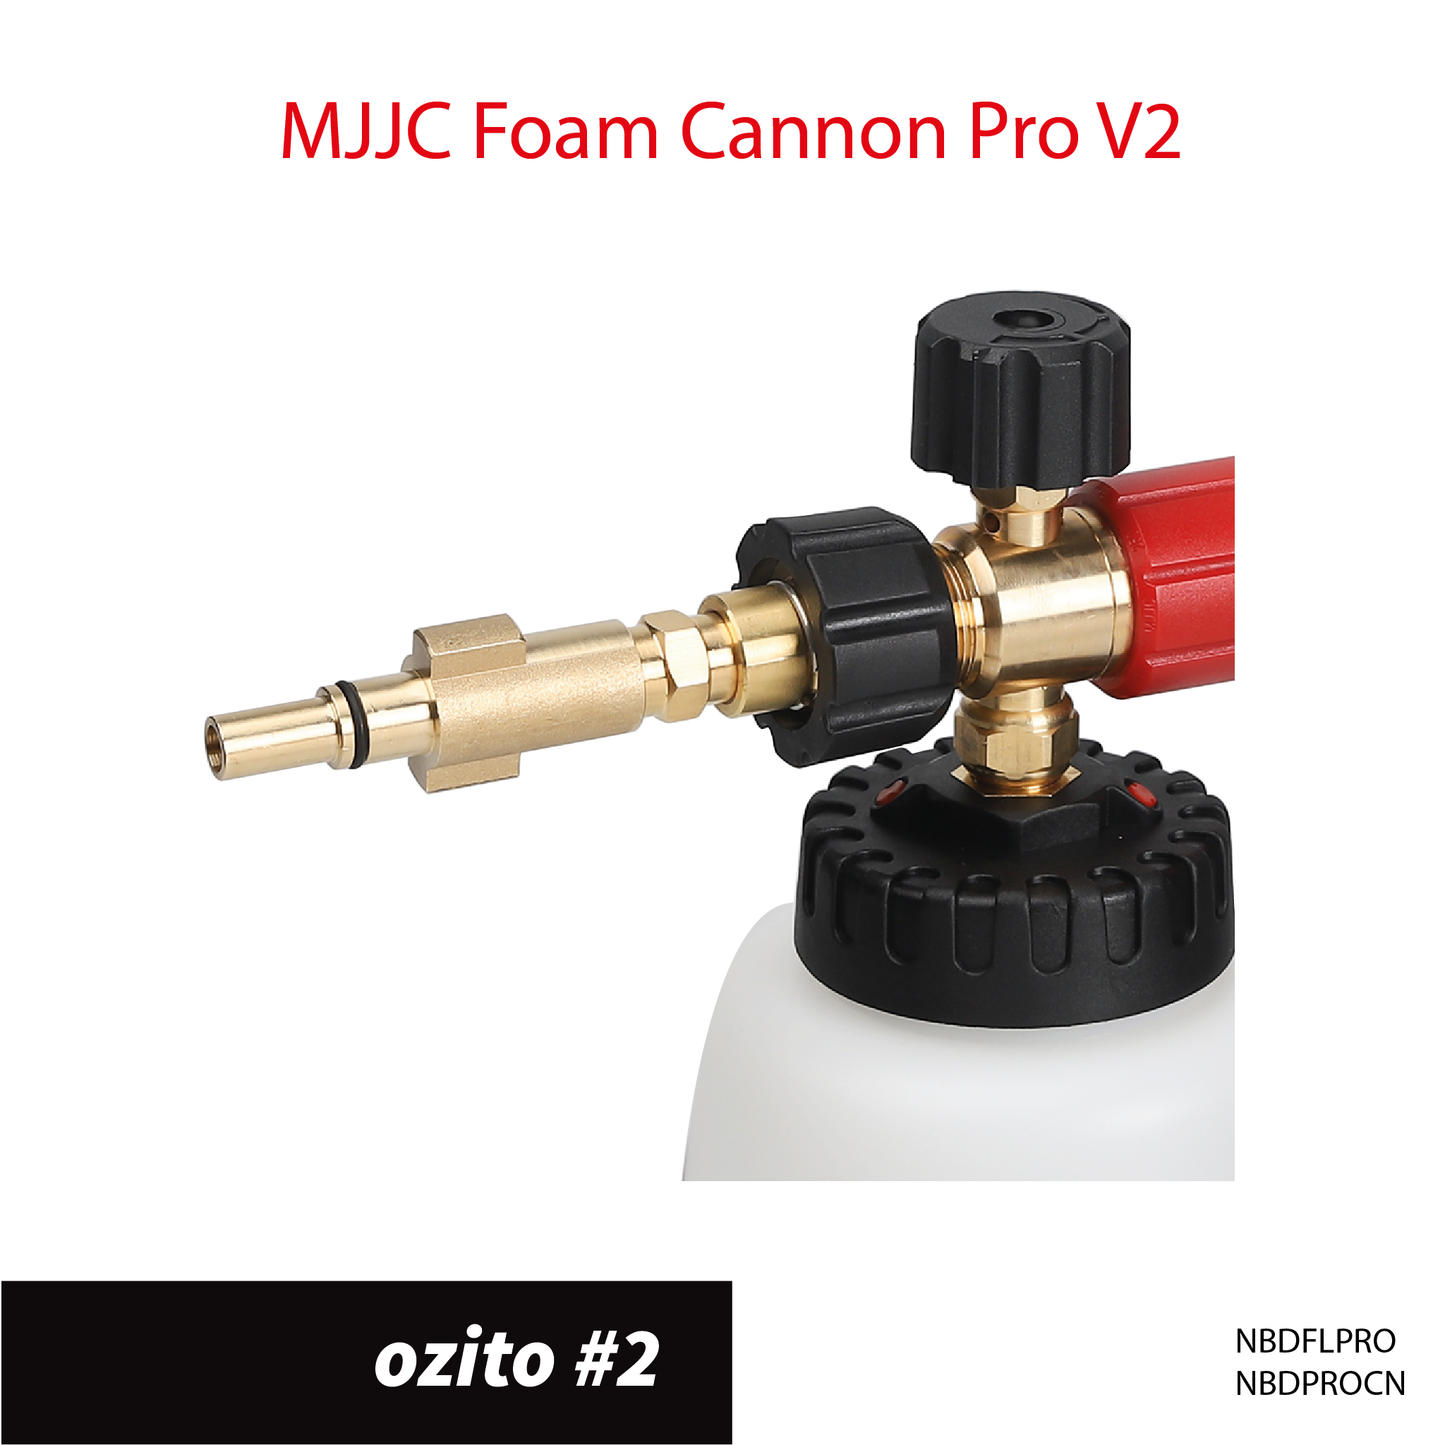 Ozito pressure washer - MJJC Foam Cannon Pro V2 (Pressure Washer Snow Foam Lance Gun)